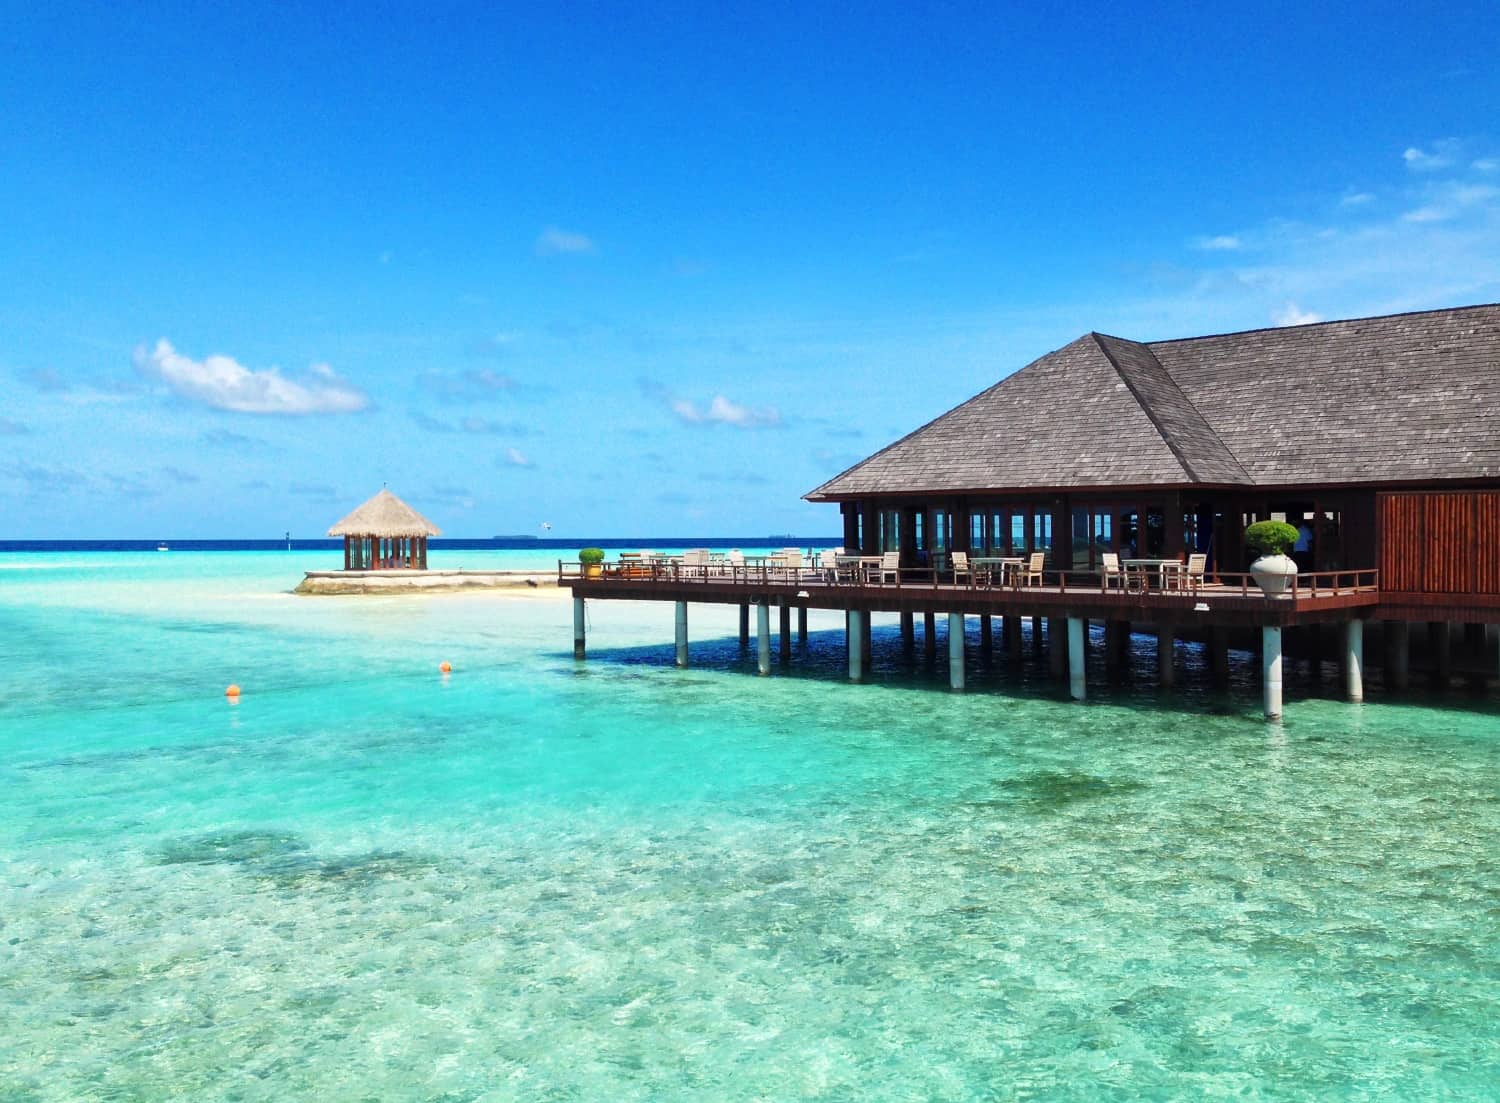 A Budget Traveler Reviews Olhuveli Resort in the Maldives